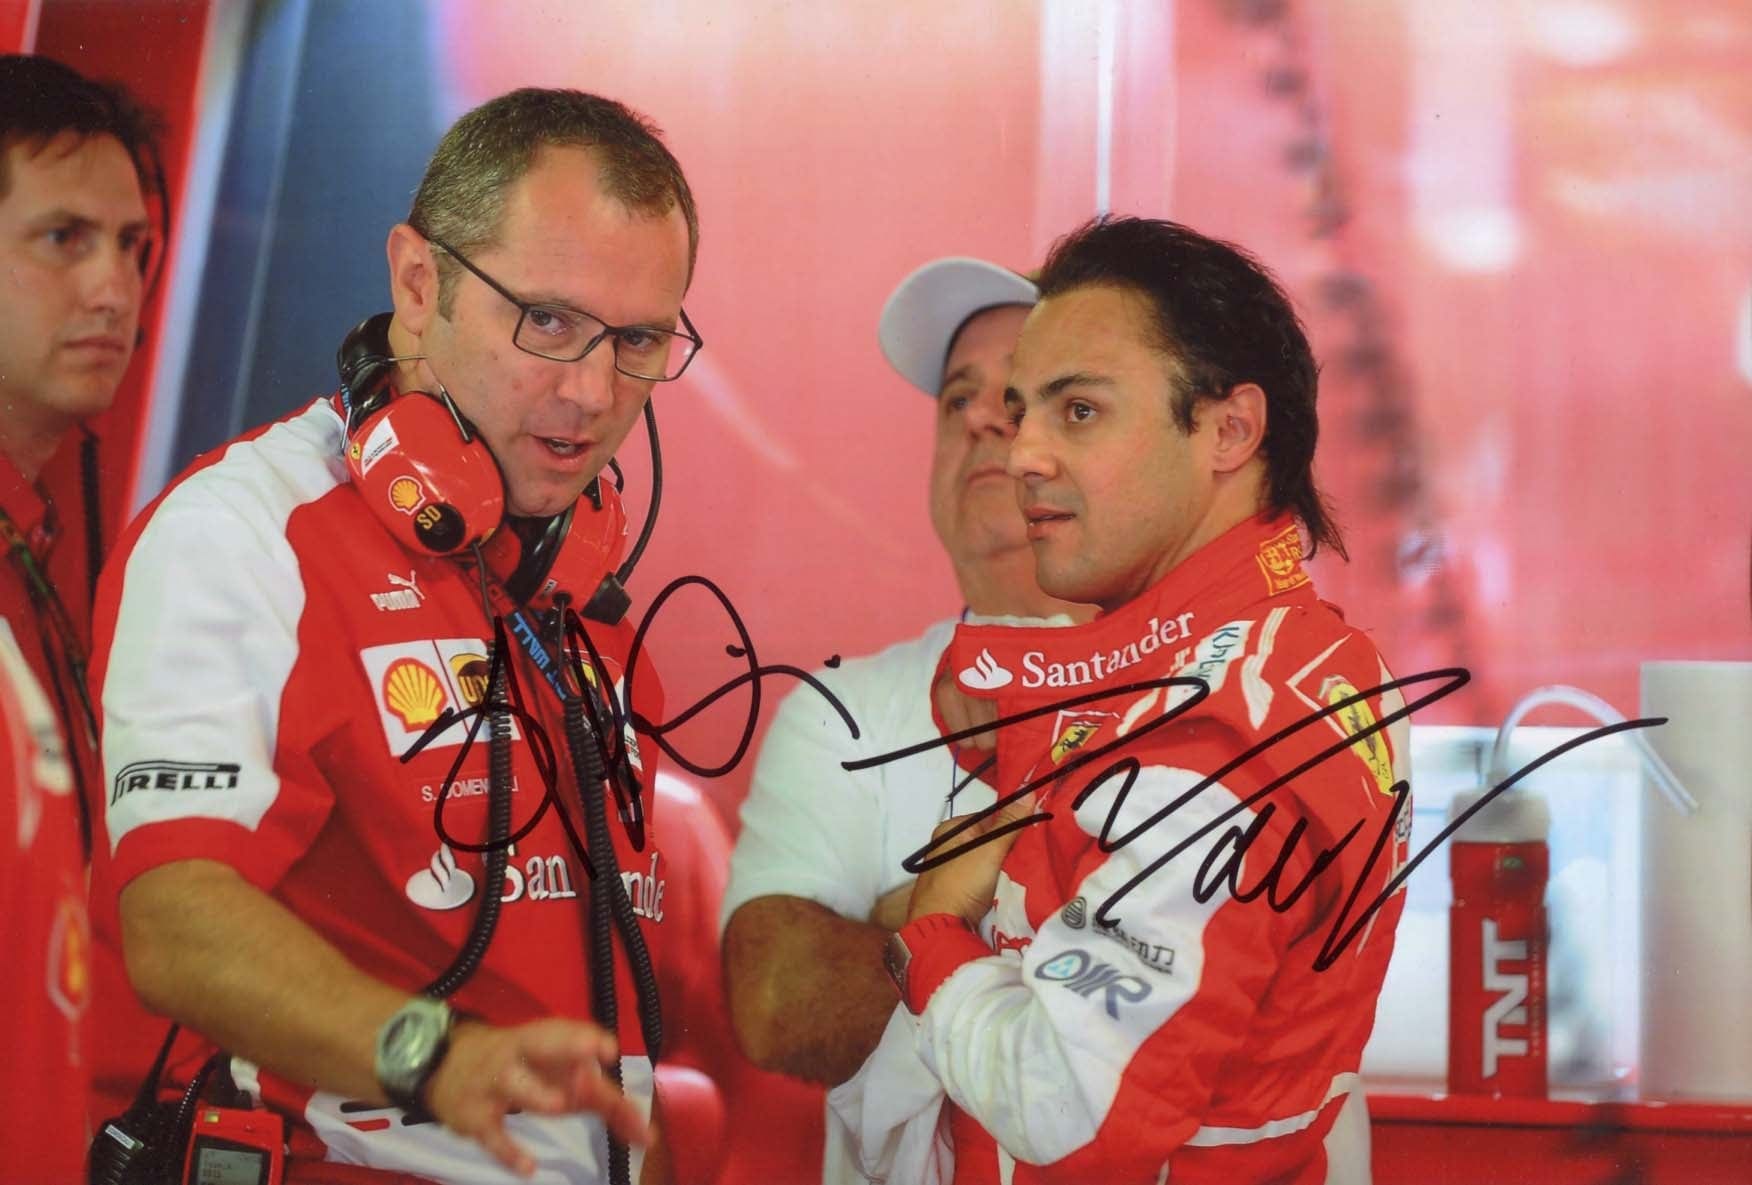 Ross &amp; Felipe Brawn &amp; Massa Autograph Autogramm | ID 7564993233045